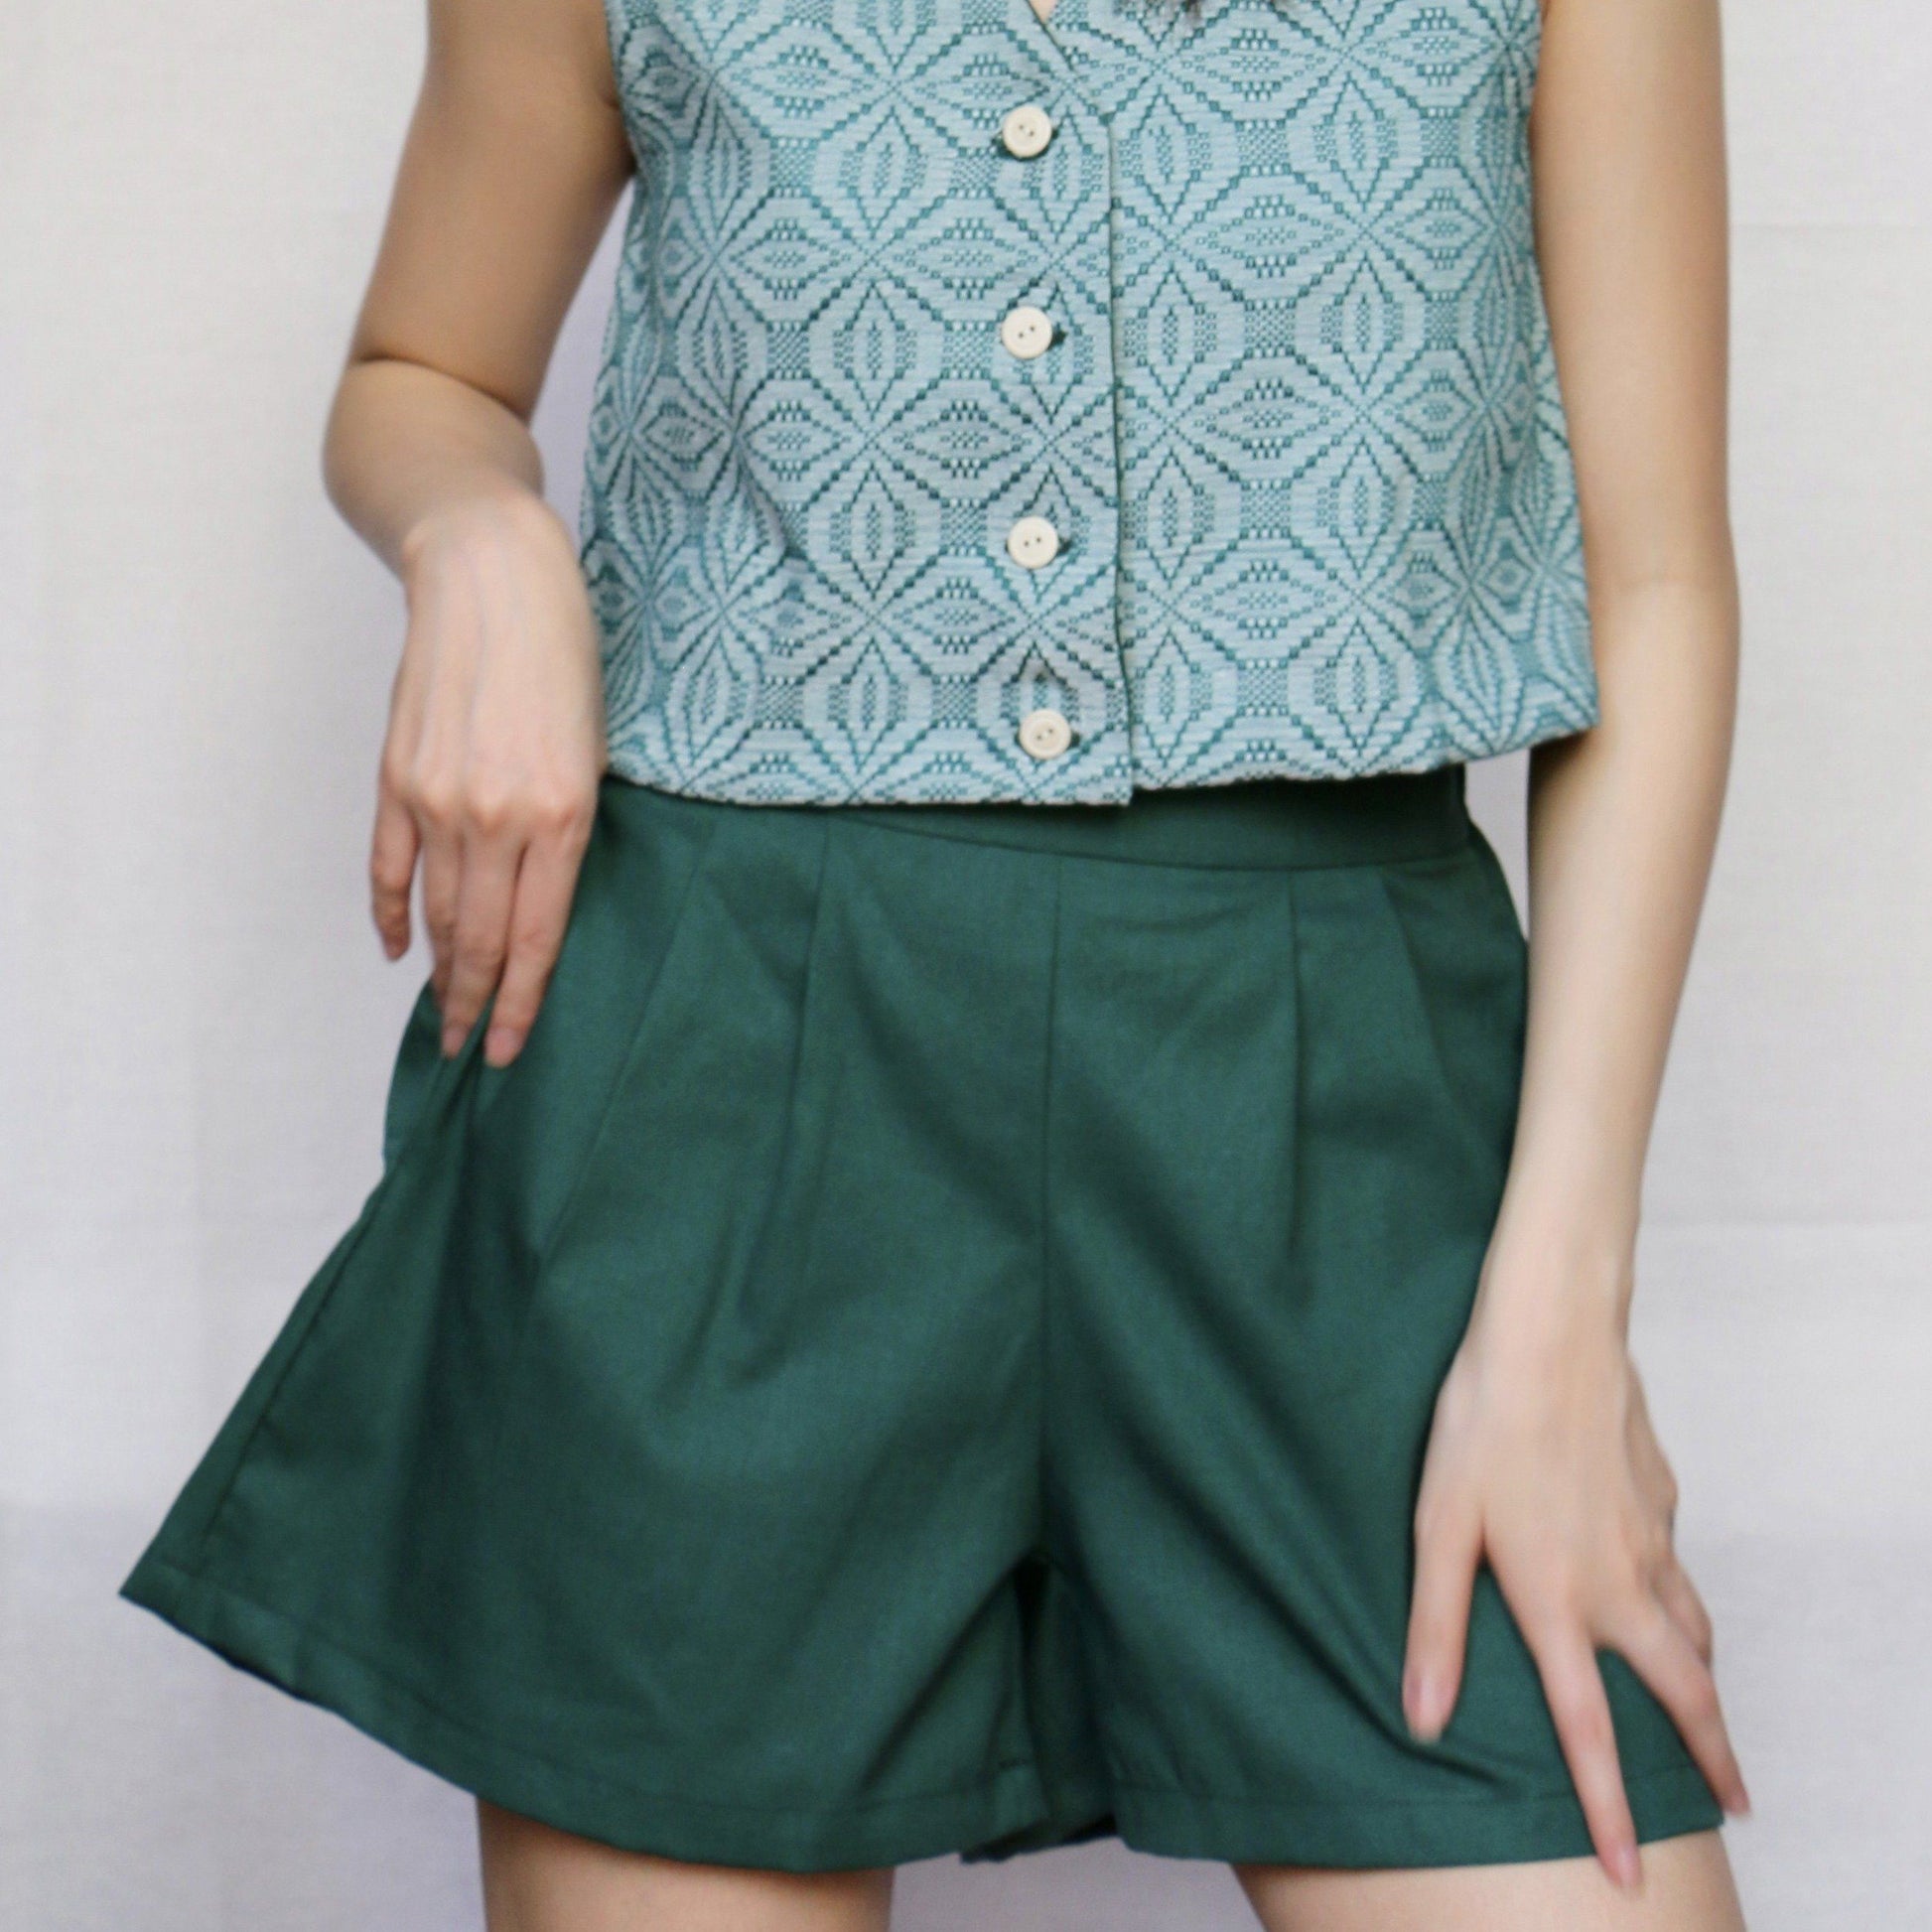 All-Around Shorts Emerald Fashion Rags2Riches